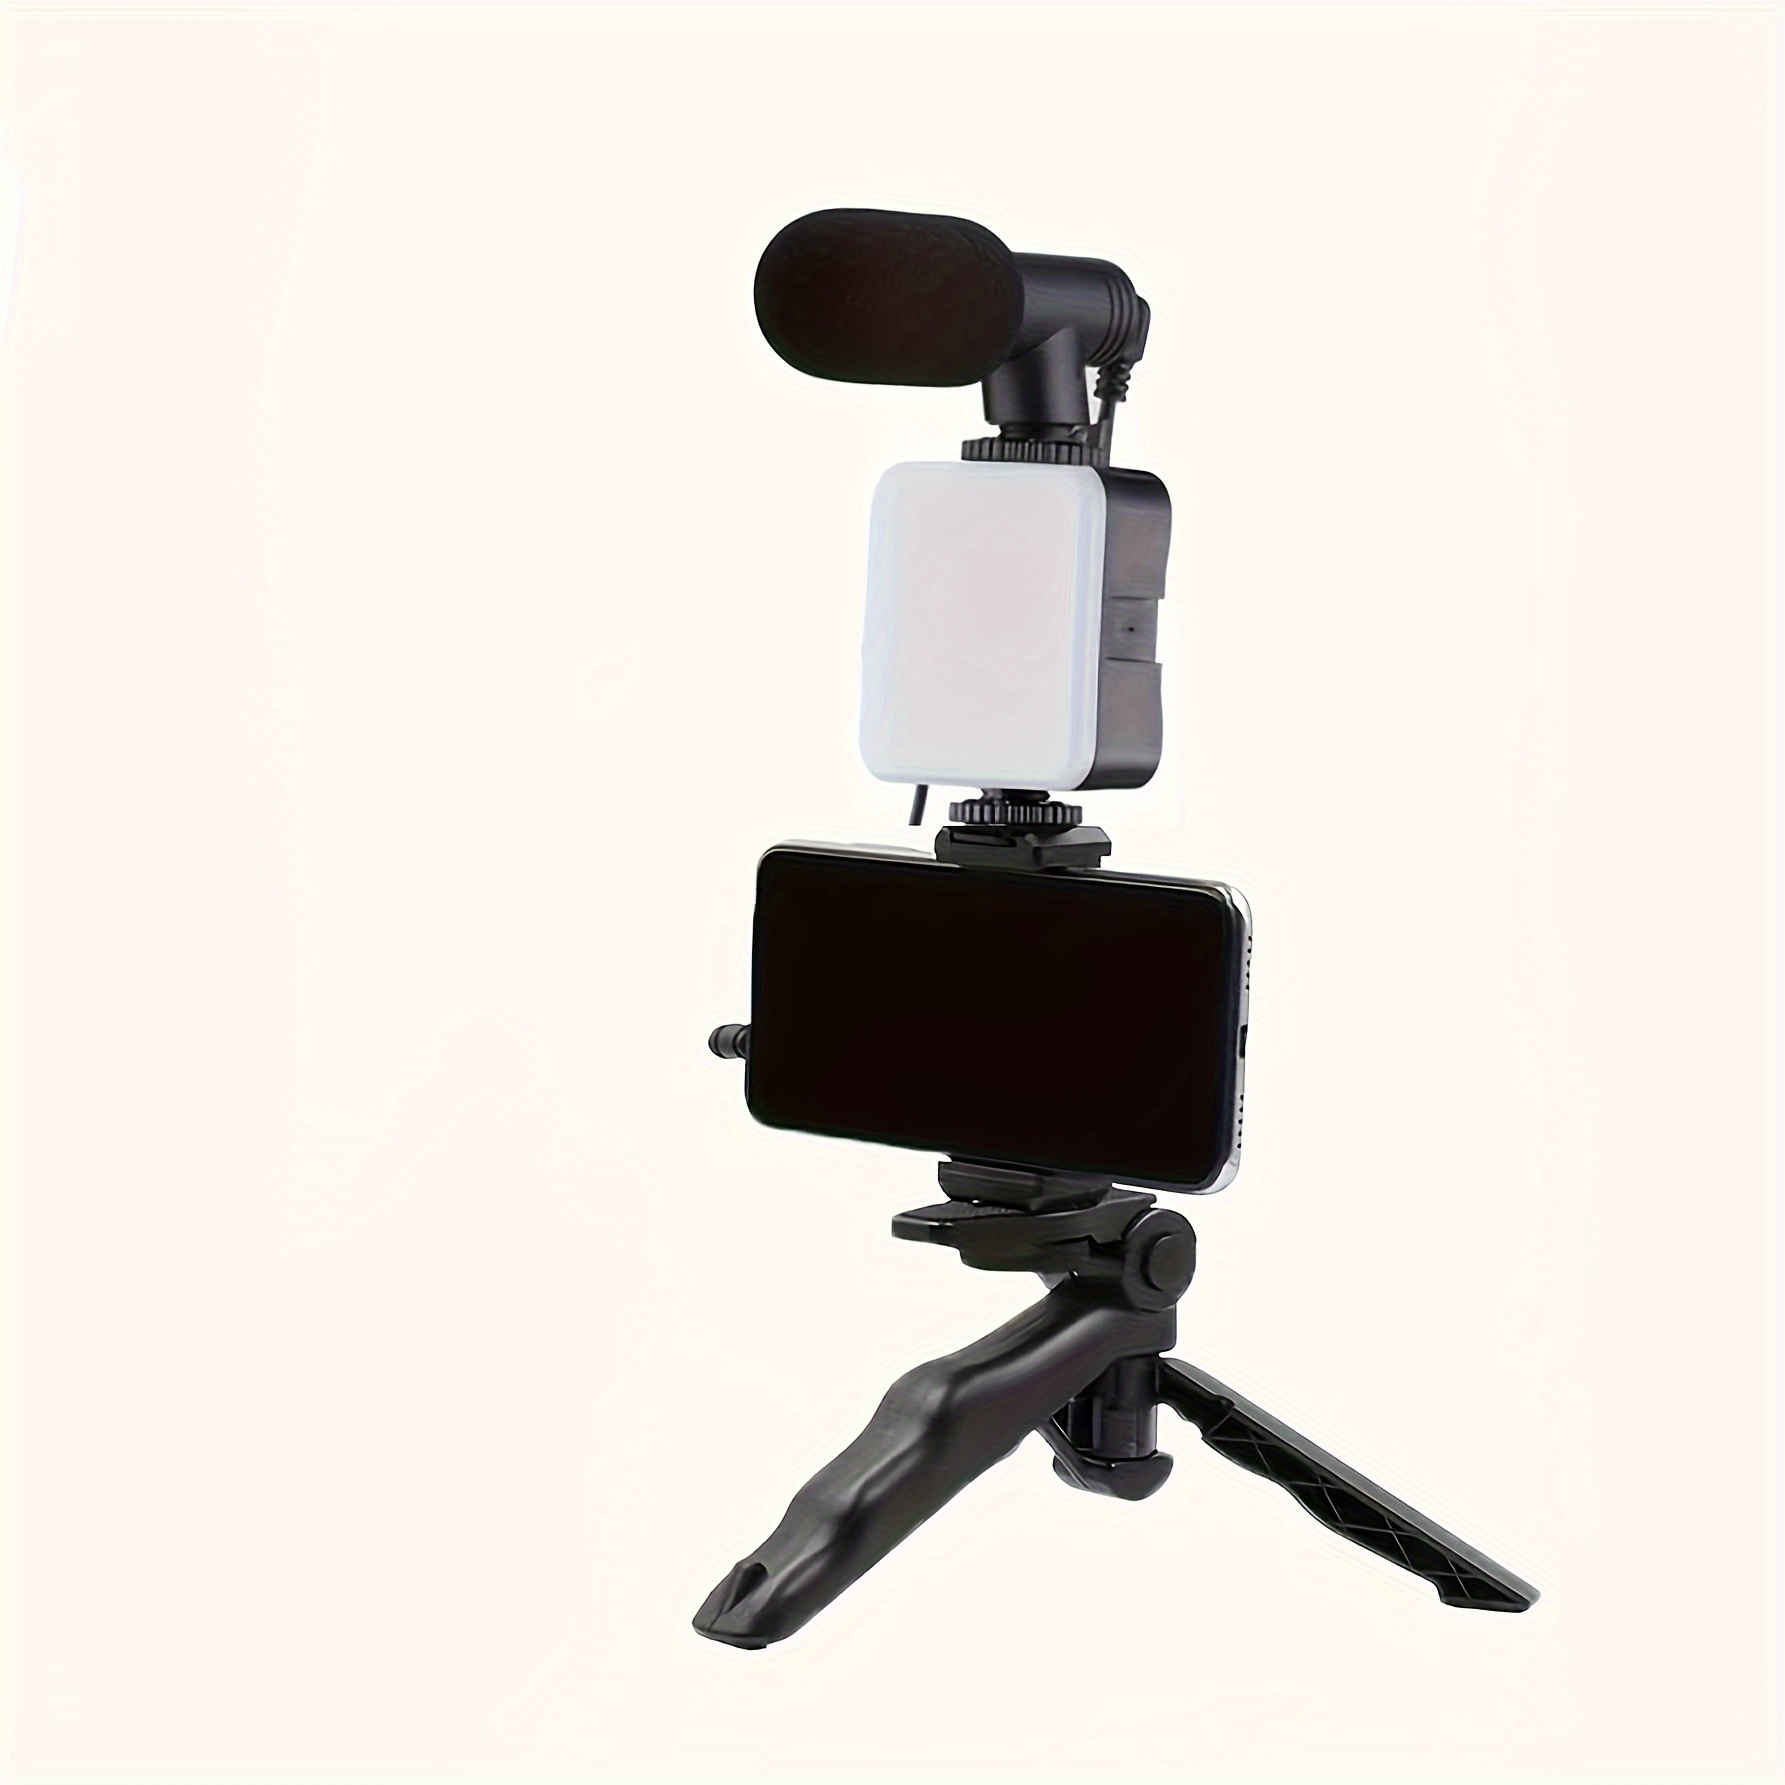 Kit de luz y micrófono para teléfono inteligente, trípode portátil para  teléfono móvil con micrófono y luz, set para transmisión en vivo